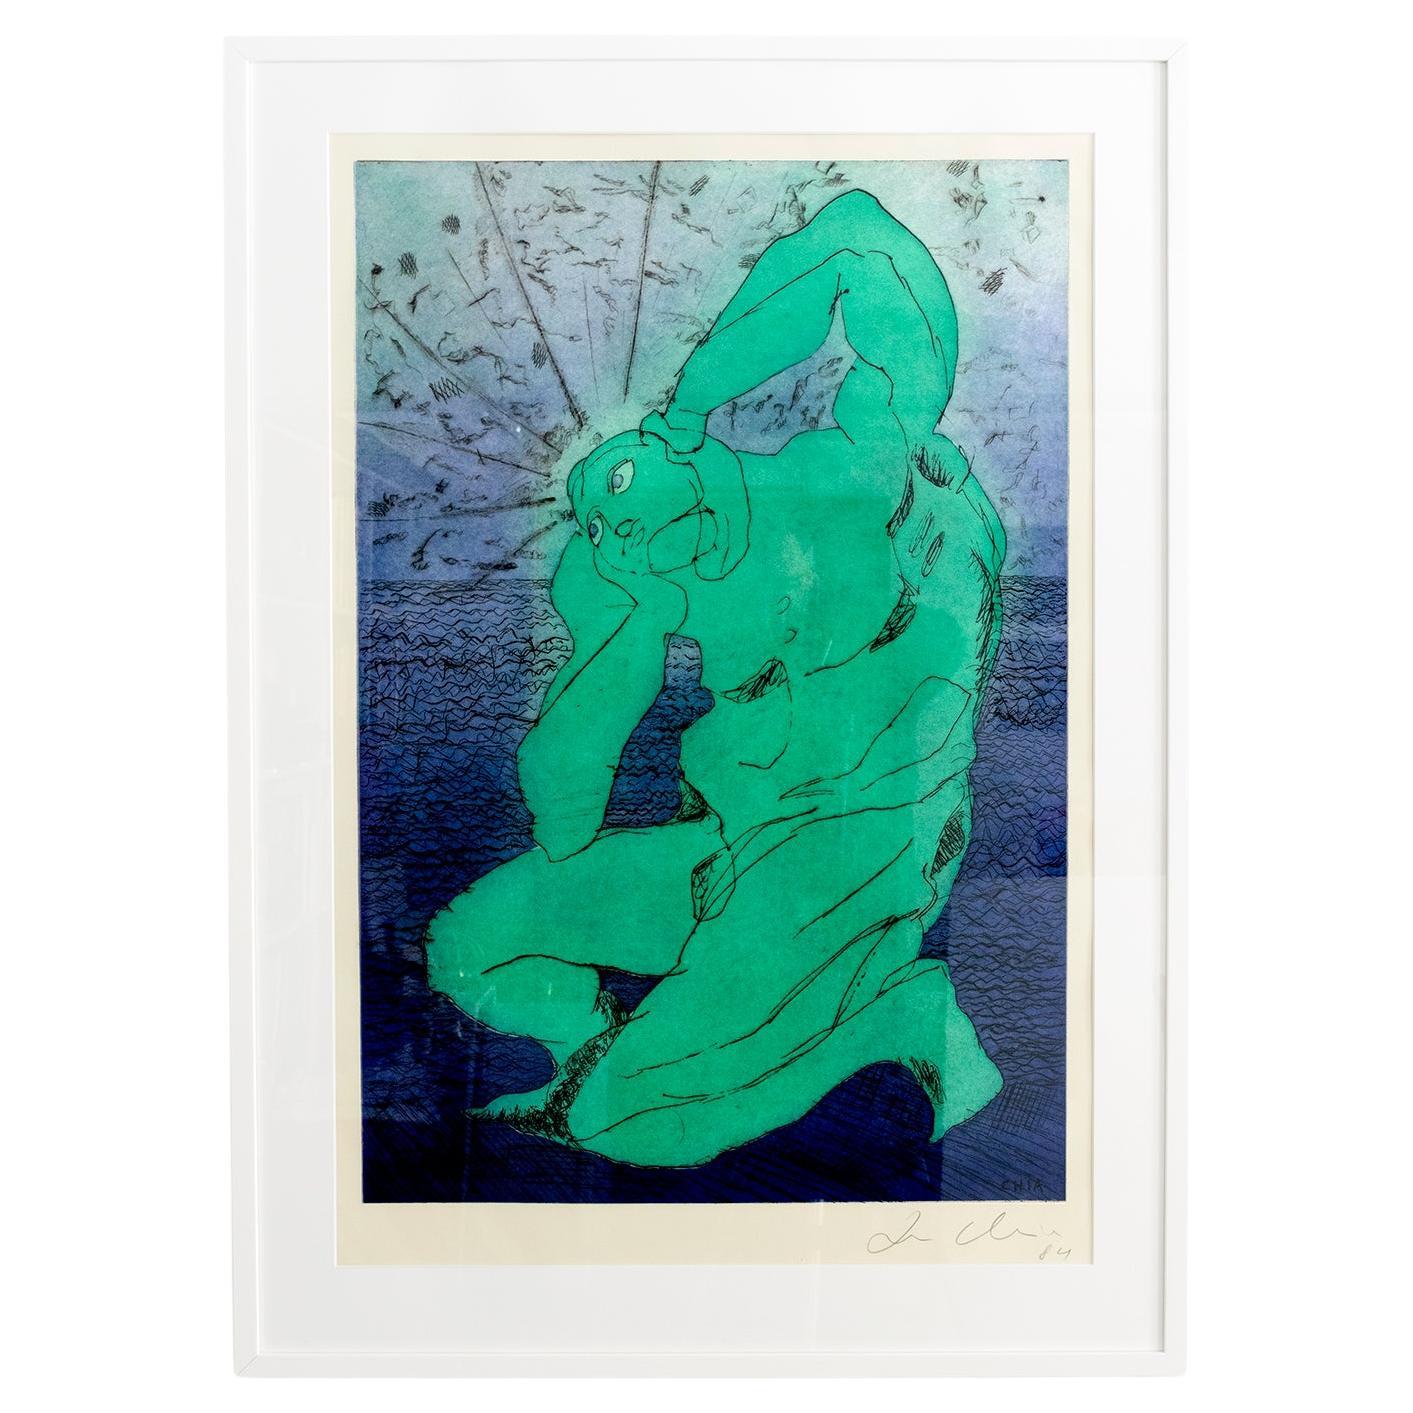 Sandro Chia Aquatint Print in Green & Blue, "Man & Sea" Post Modern